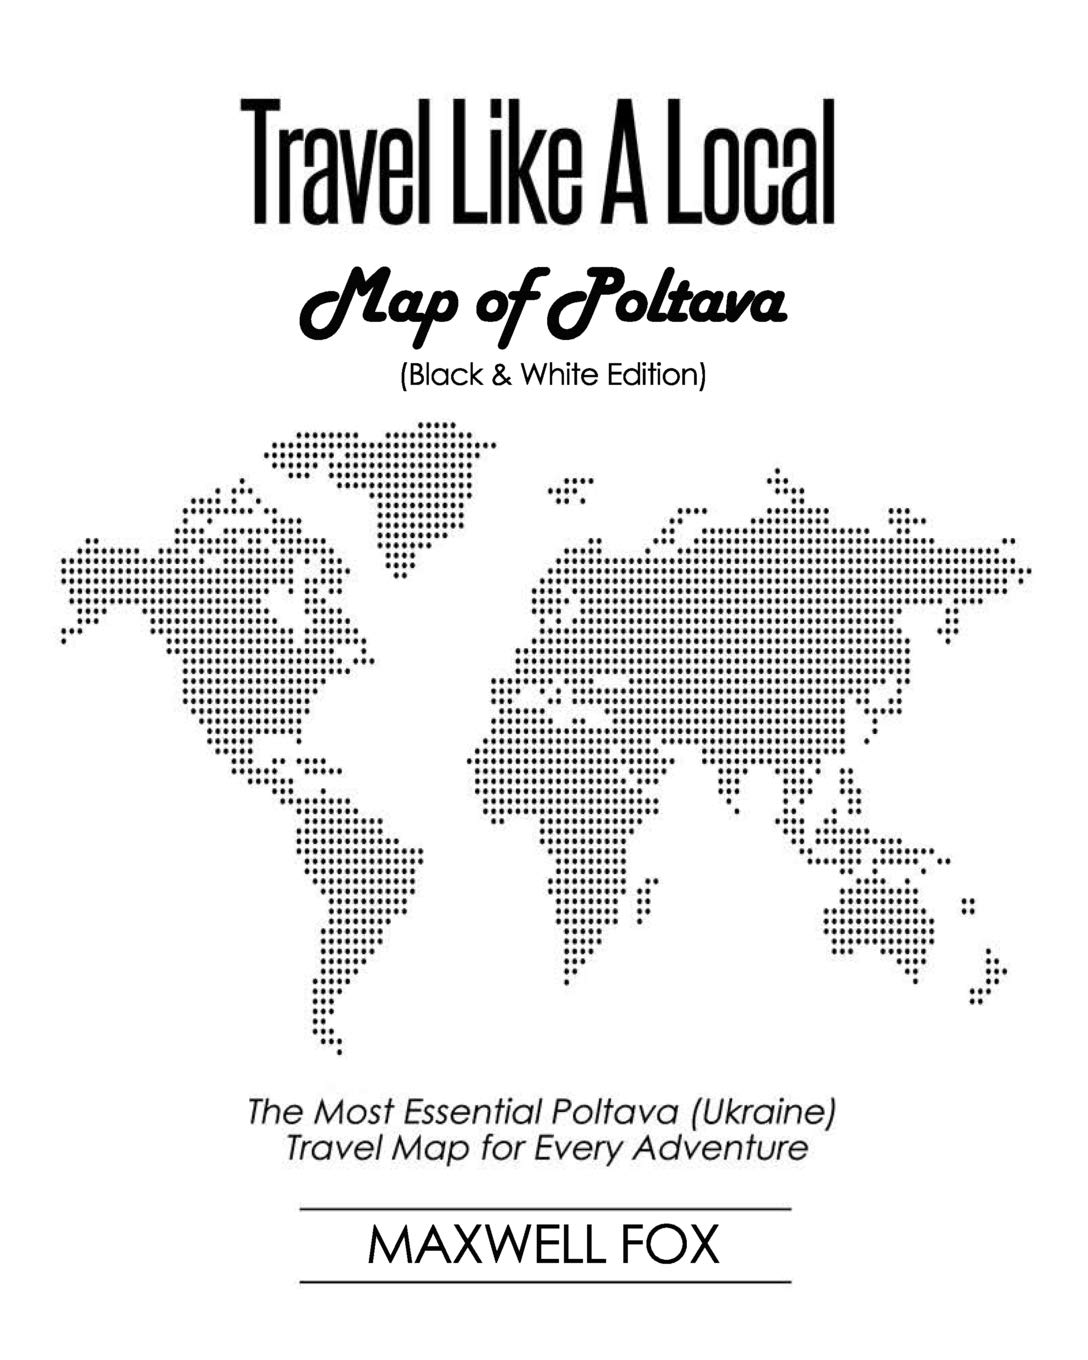 Travel Like a Local - Map of Poltava: The Most Essential Poltava (Ukraine) Travel Map for Every Adventure